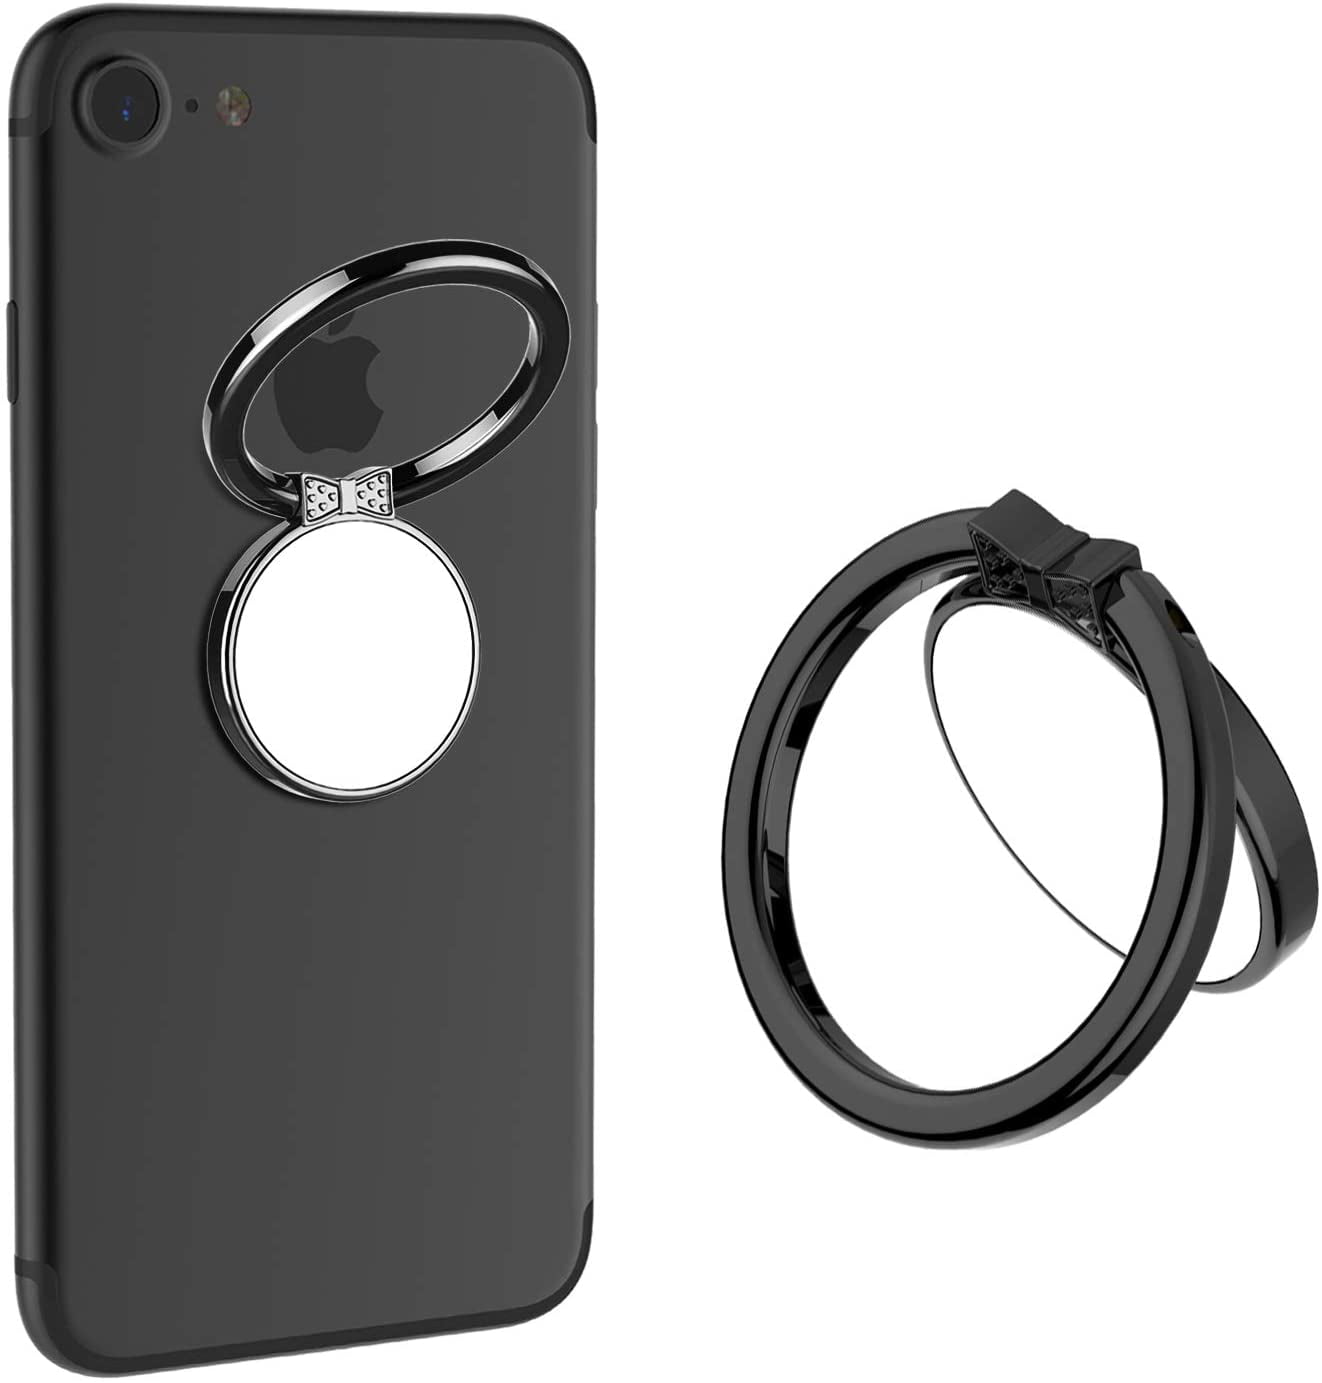 Cell Phone Ring Holder Phone Ring Grip Holder Adjustable 360° Rotation Finger Ring Stand for Smartphones Tablets Black